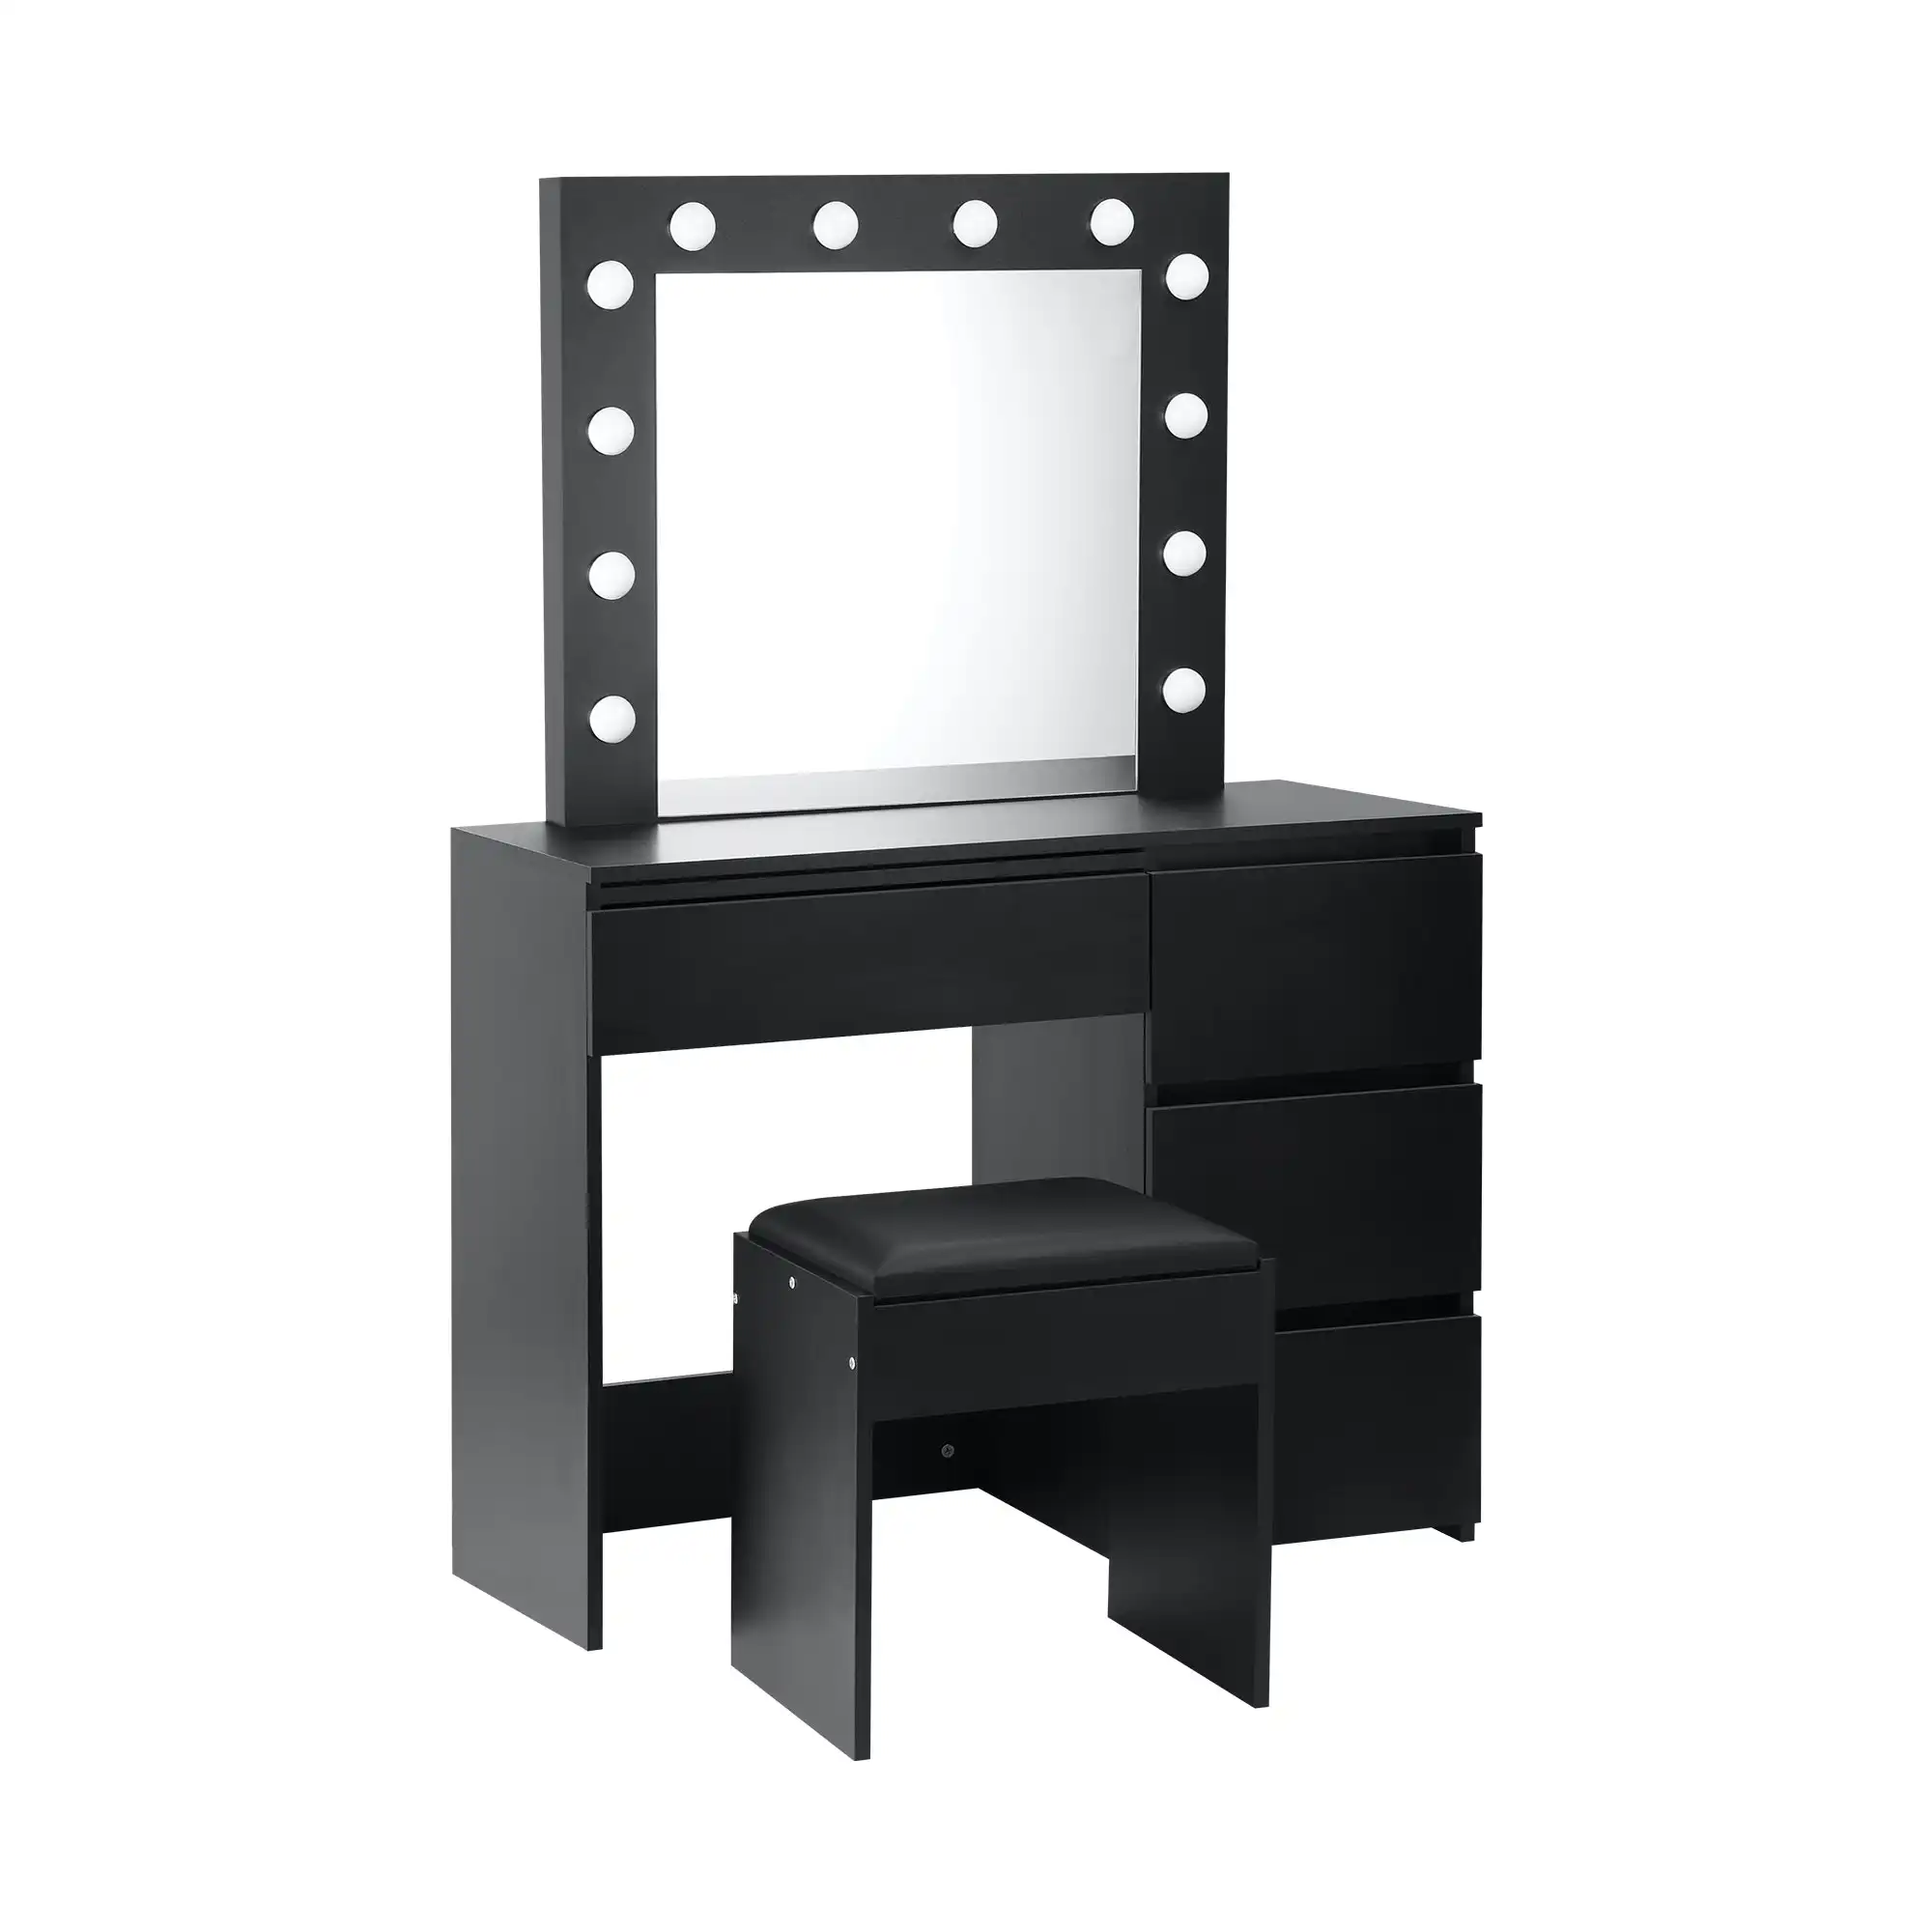 Oikiture Dressing Table Stool Set Makeup Desk Mirror Storage Drawer 12 LED Bulbs Black